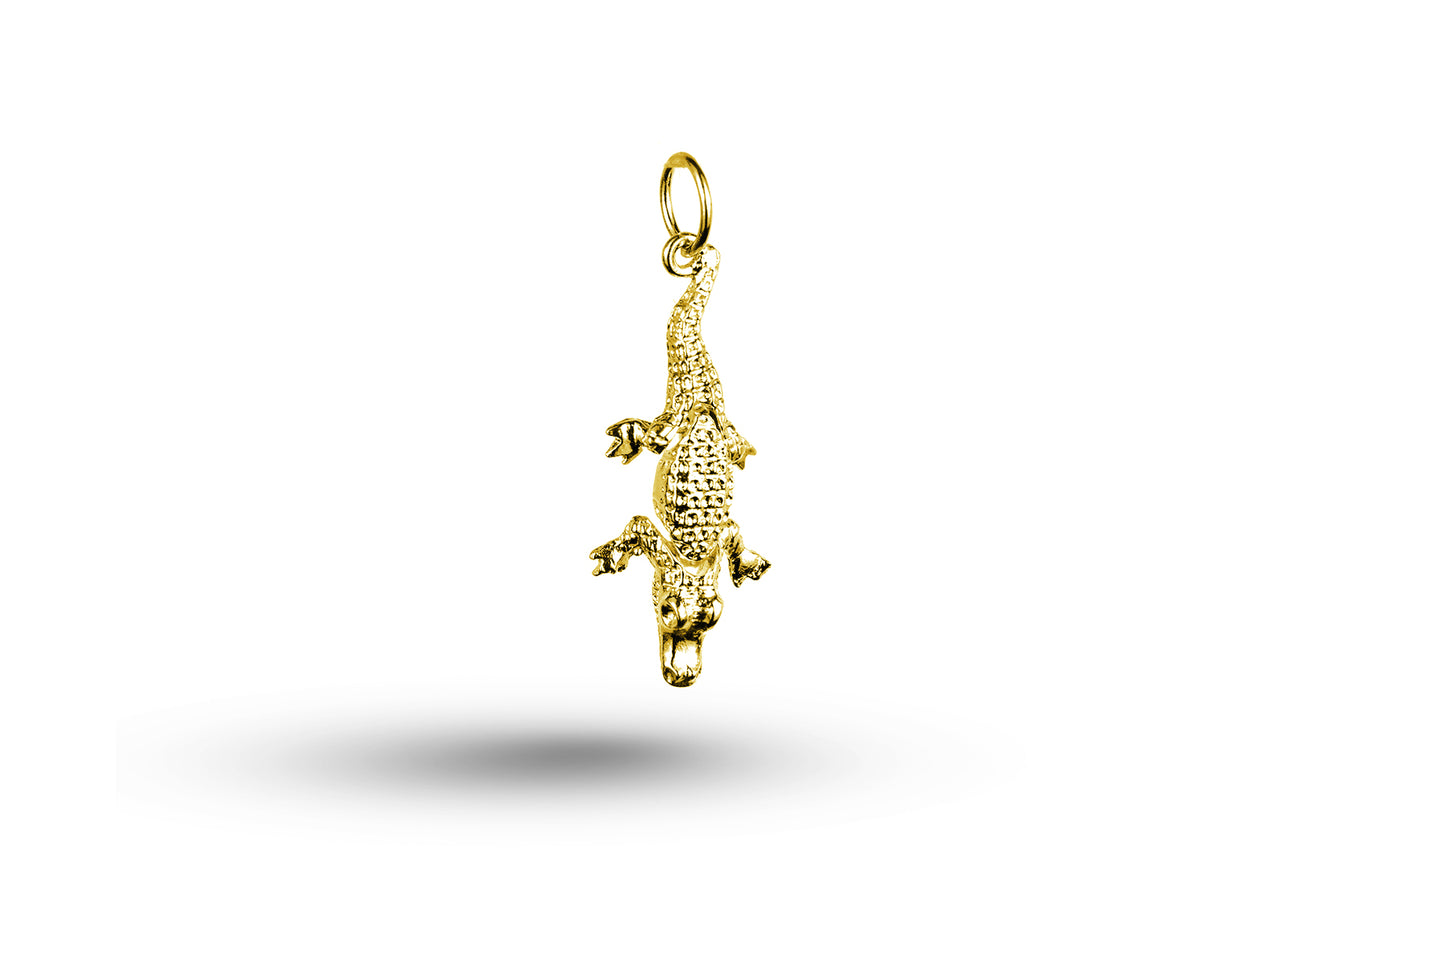 Luxury yellow gold articulated Crocodile charm.